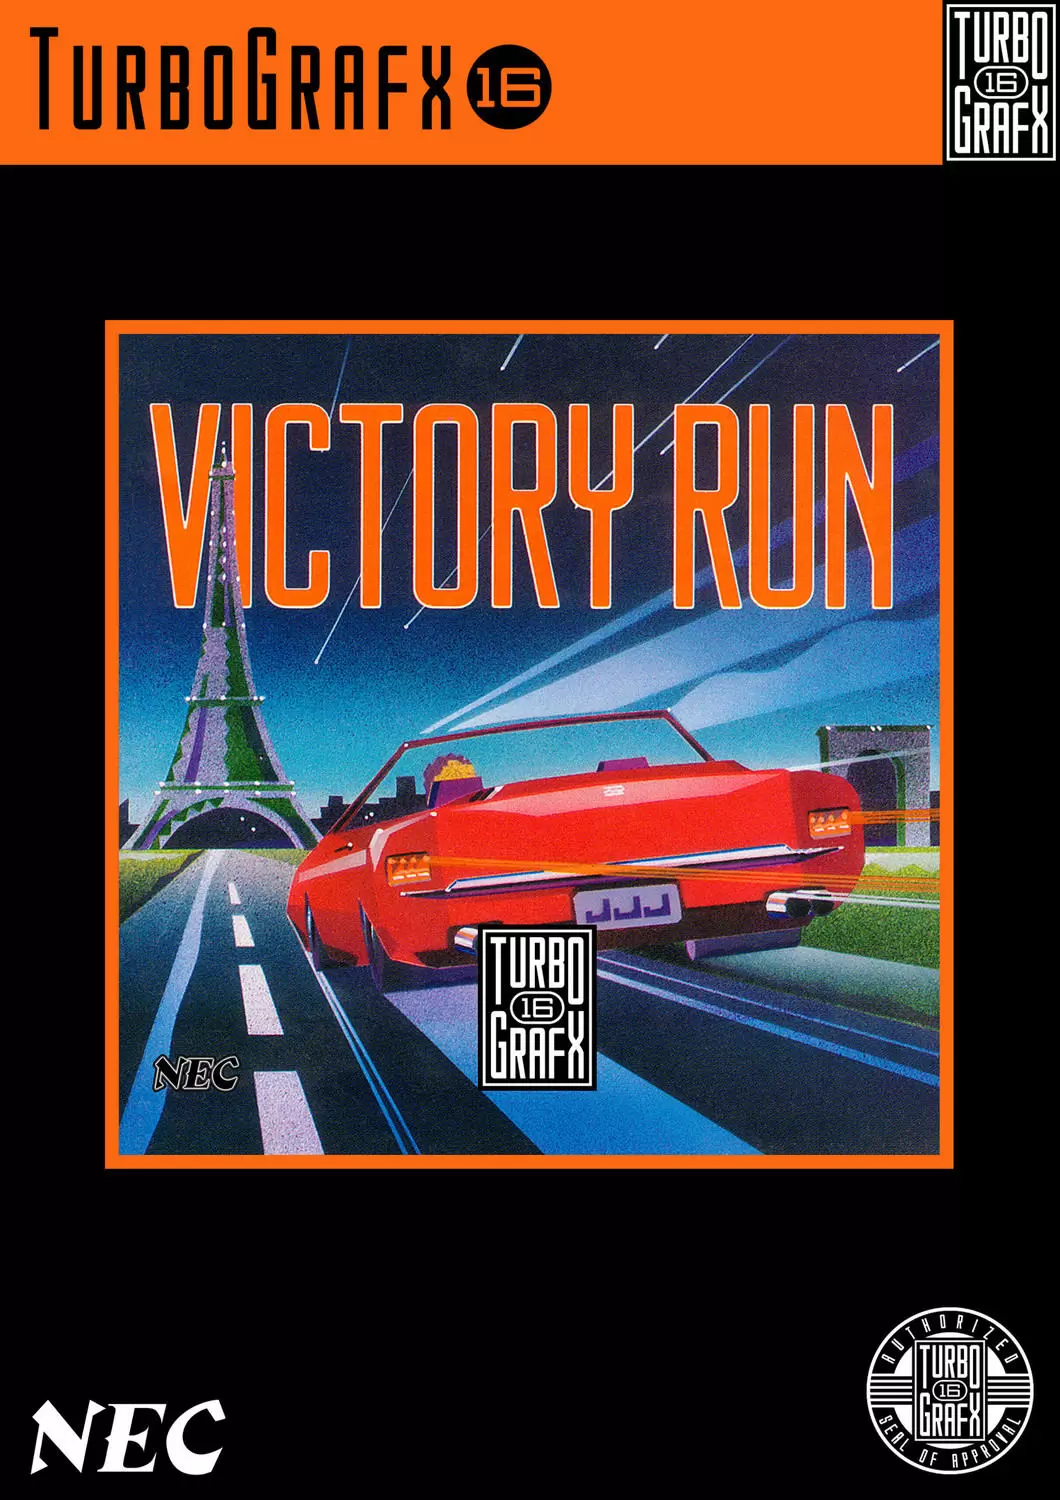 Turbo Grafx 16 (PC Engine) - Victory Run